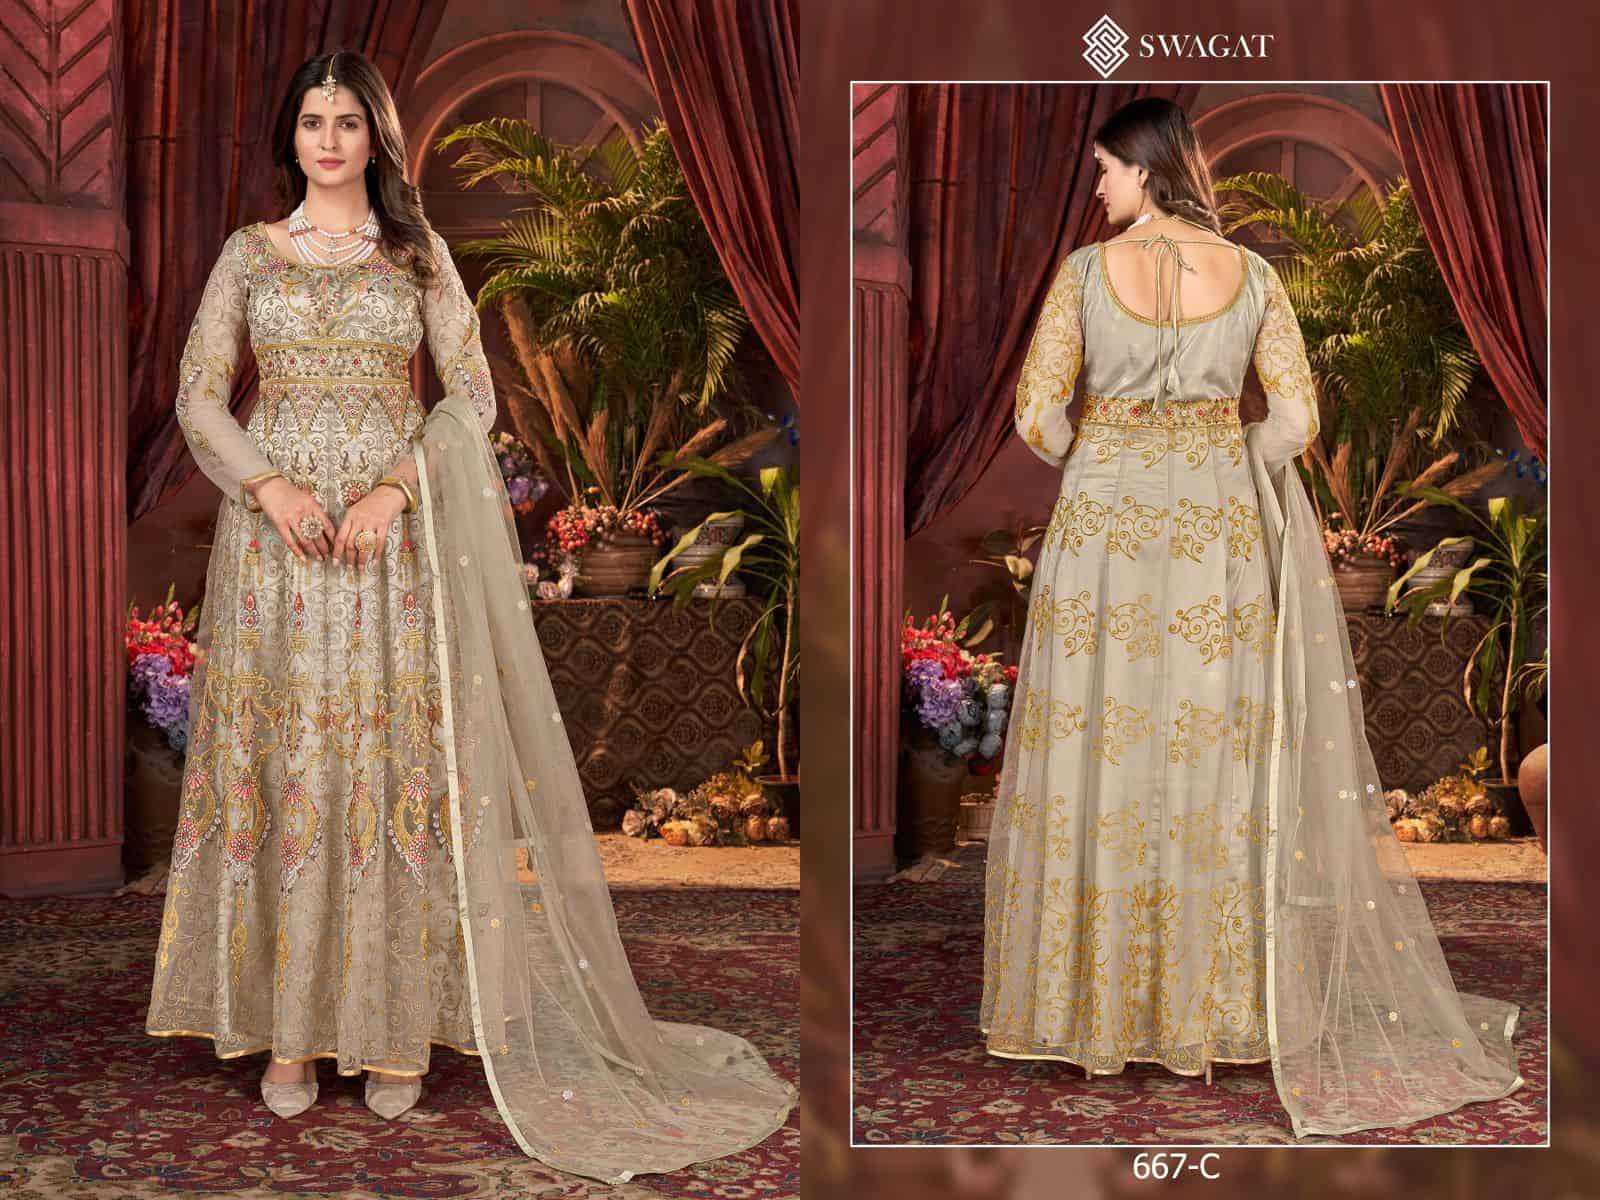 Swagat 667 C Wedding Wear Style Heavy Designer Gown Collection